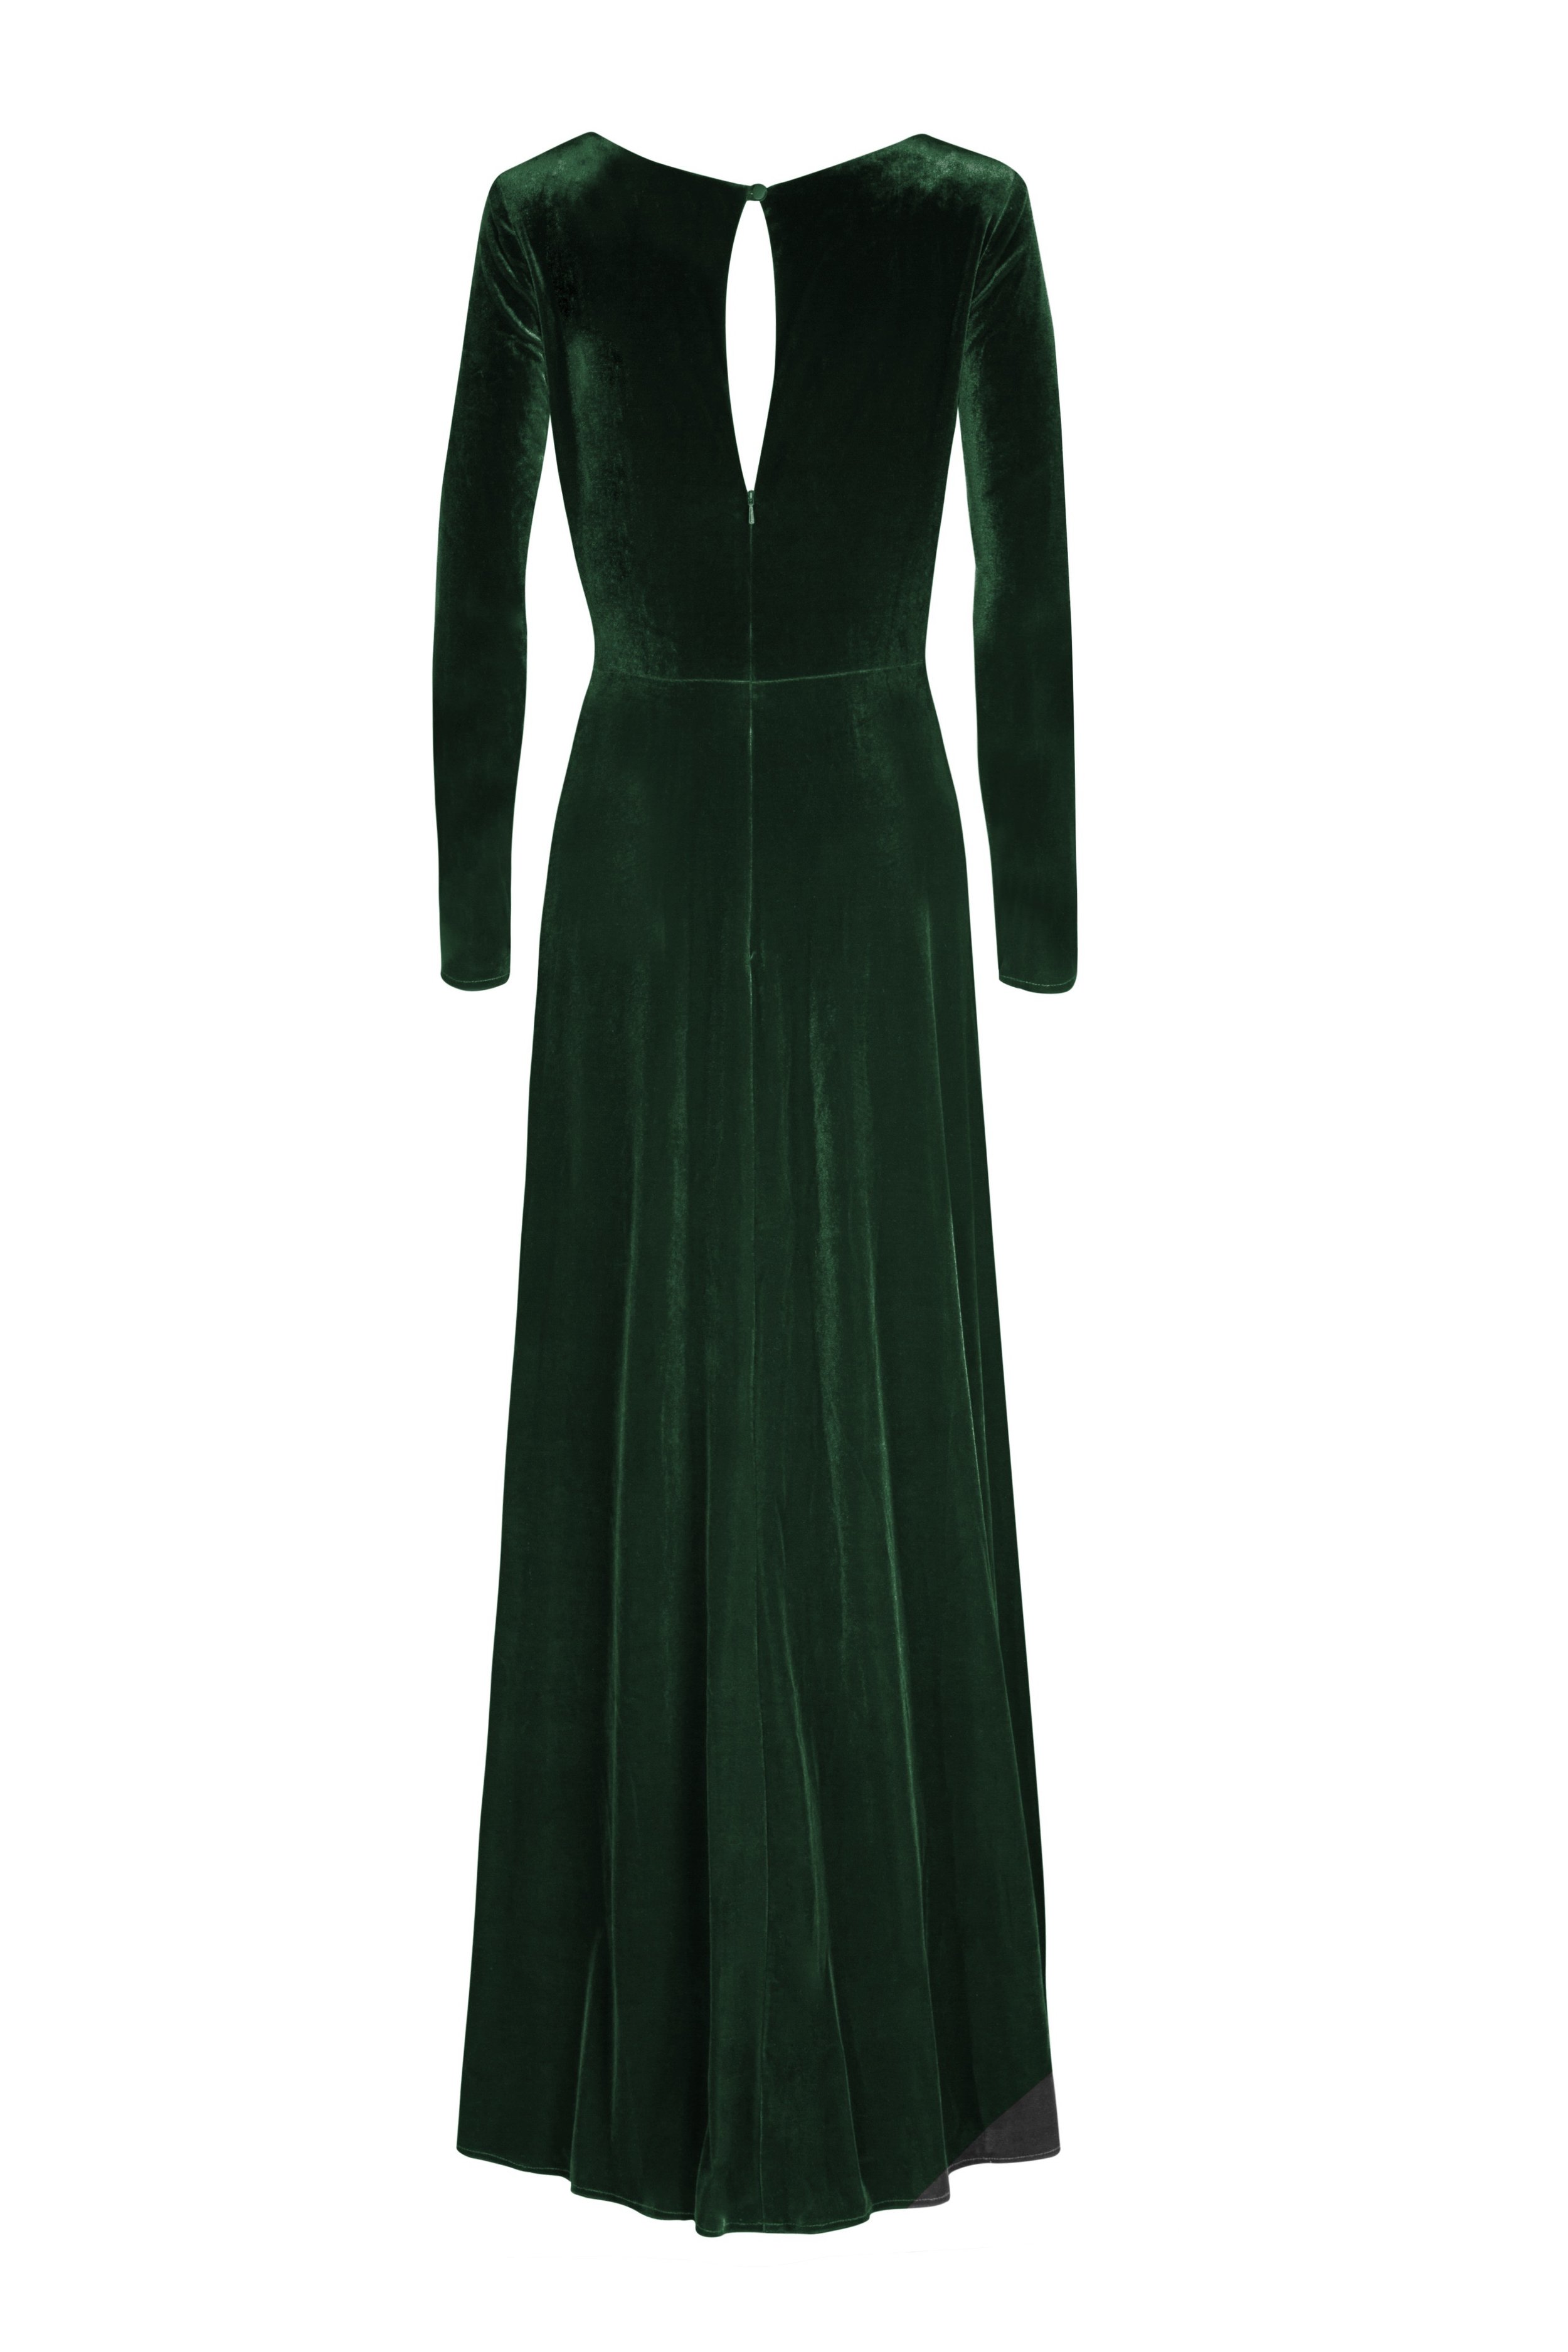 Emerald green bridesmaid dress — TH&TH